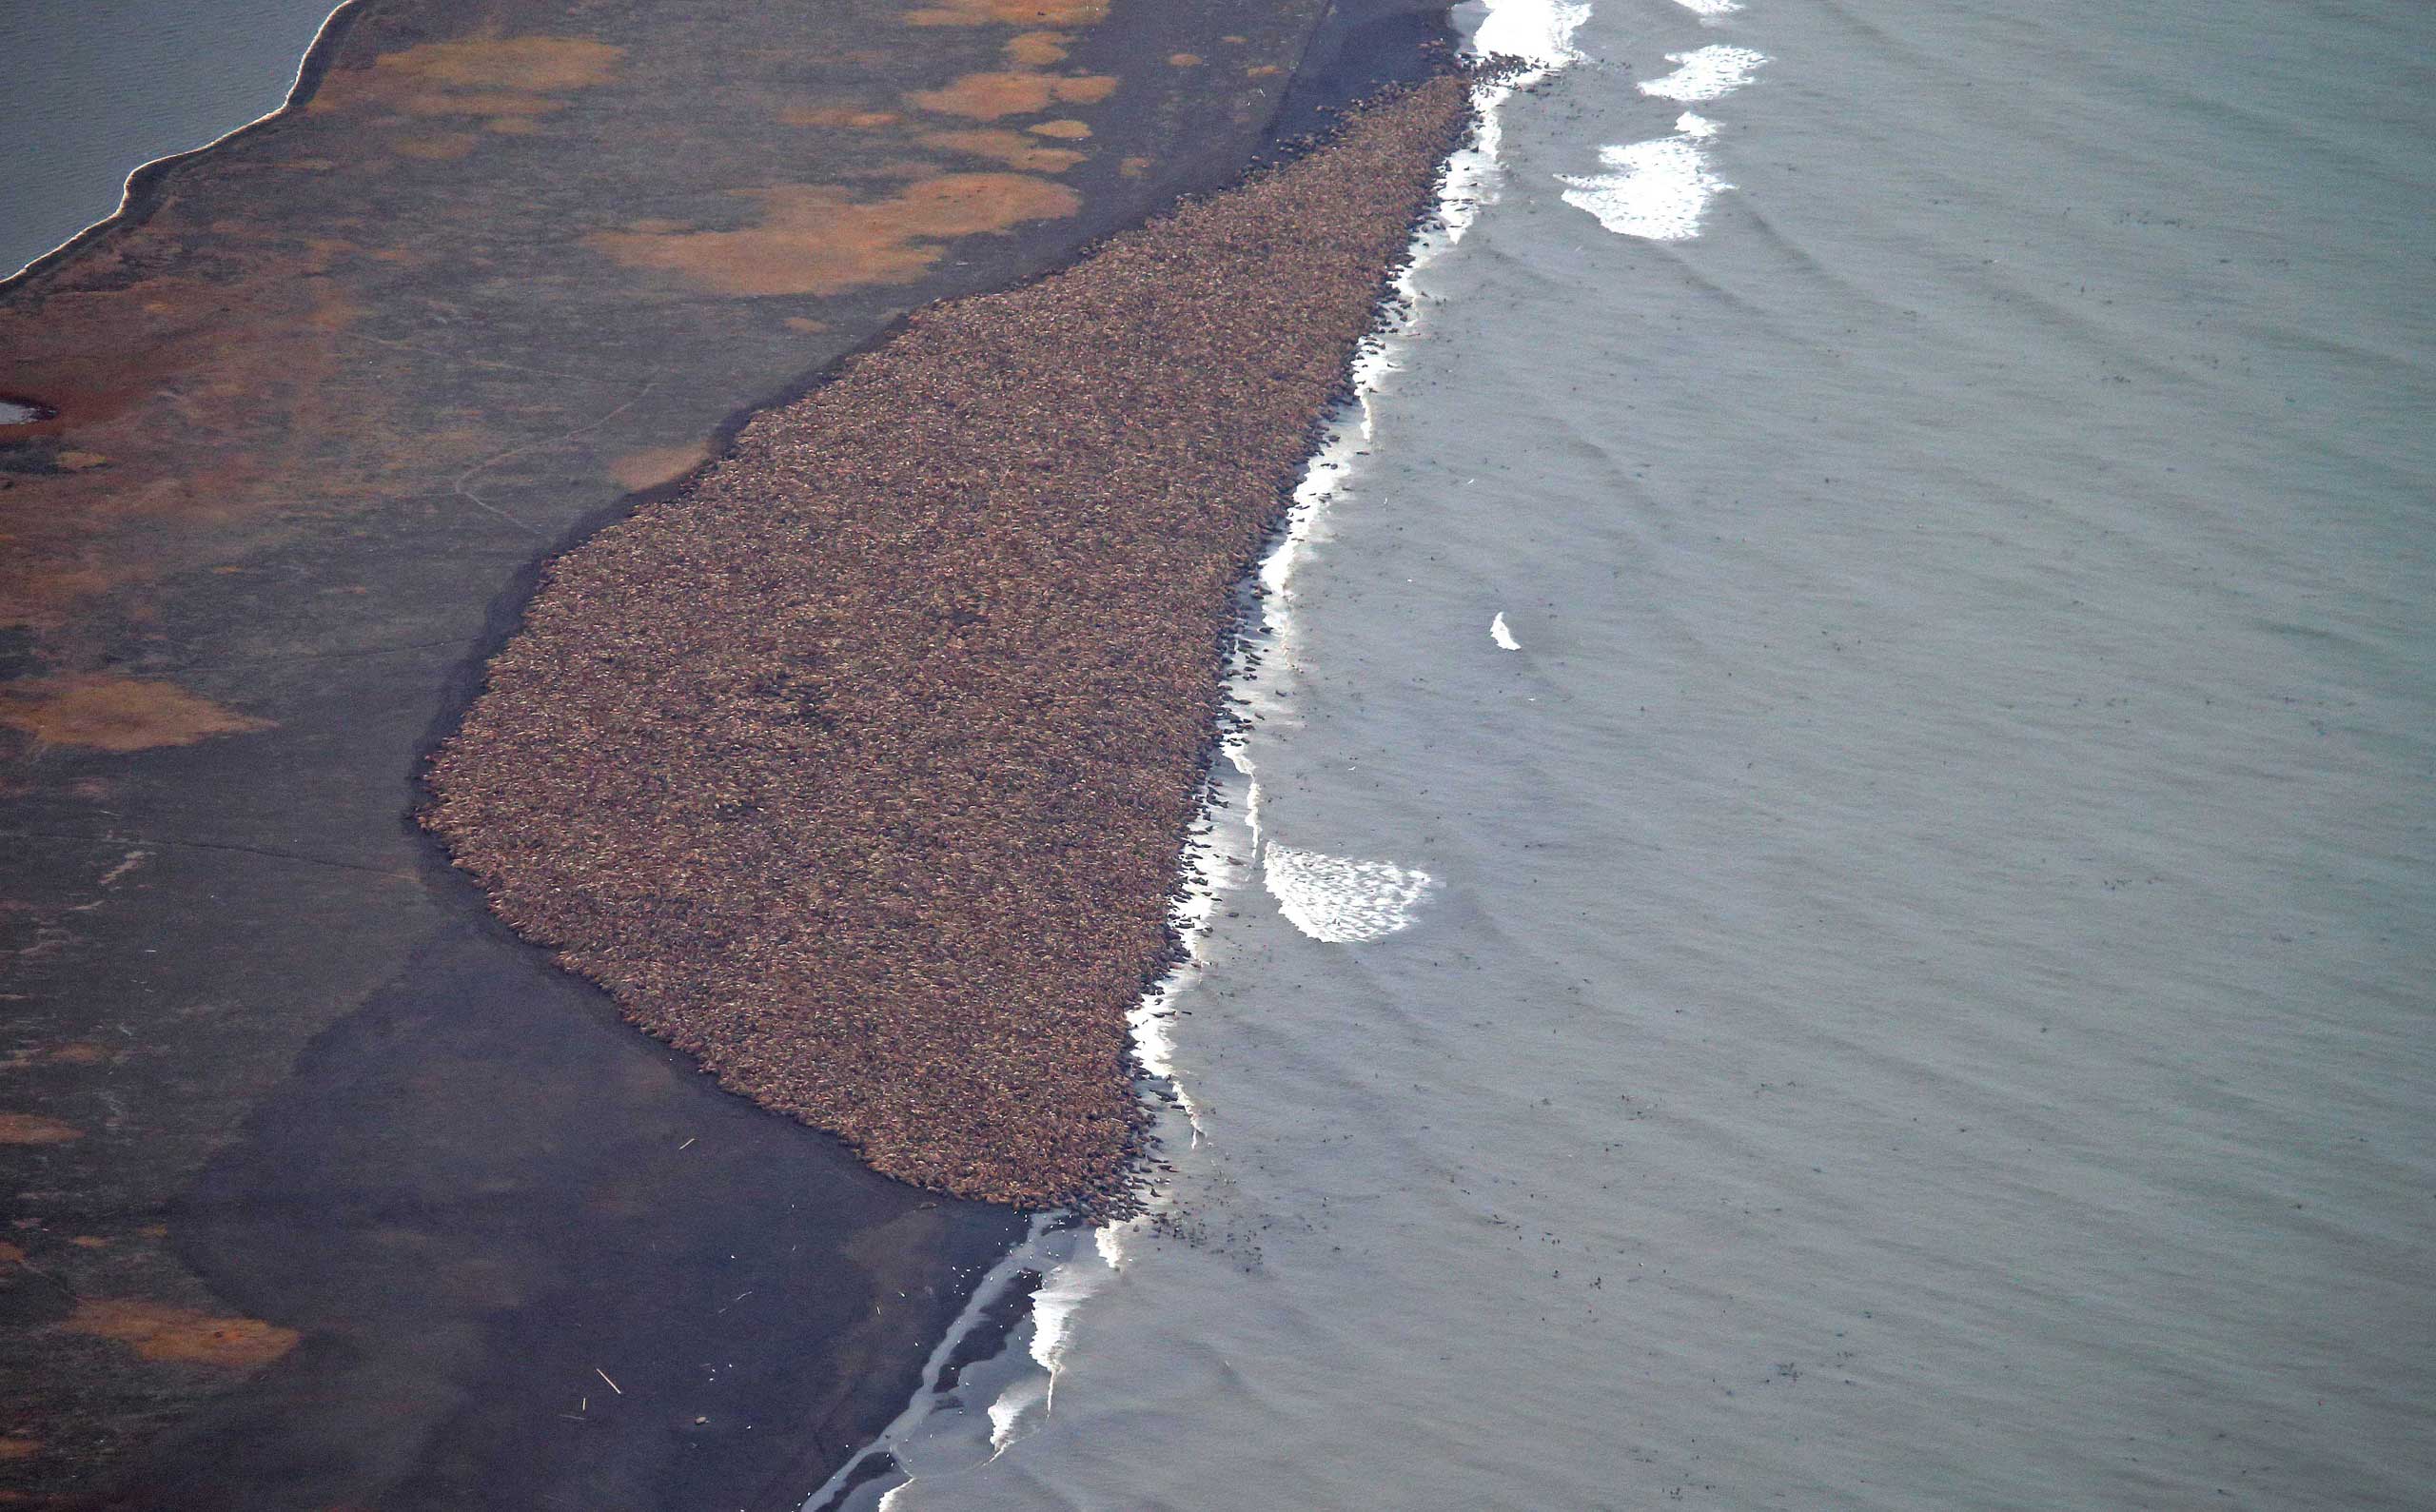 35,000 walruses gather on shore near Point Lay, Alaska, Sept. 27, 2014.